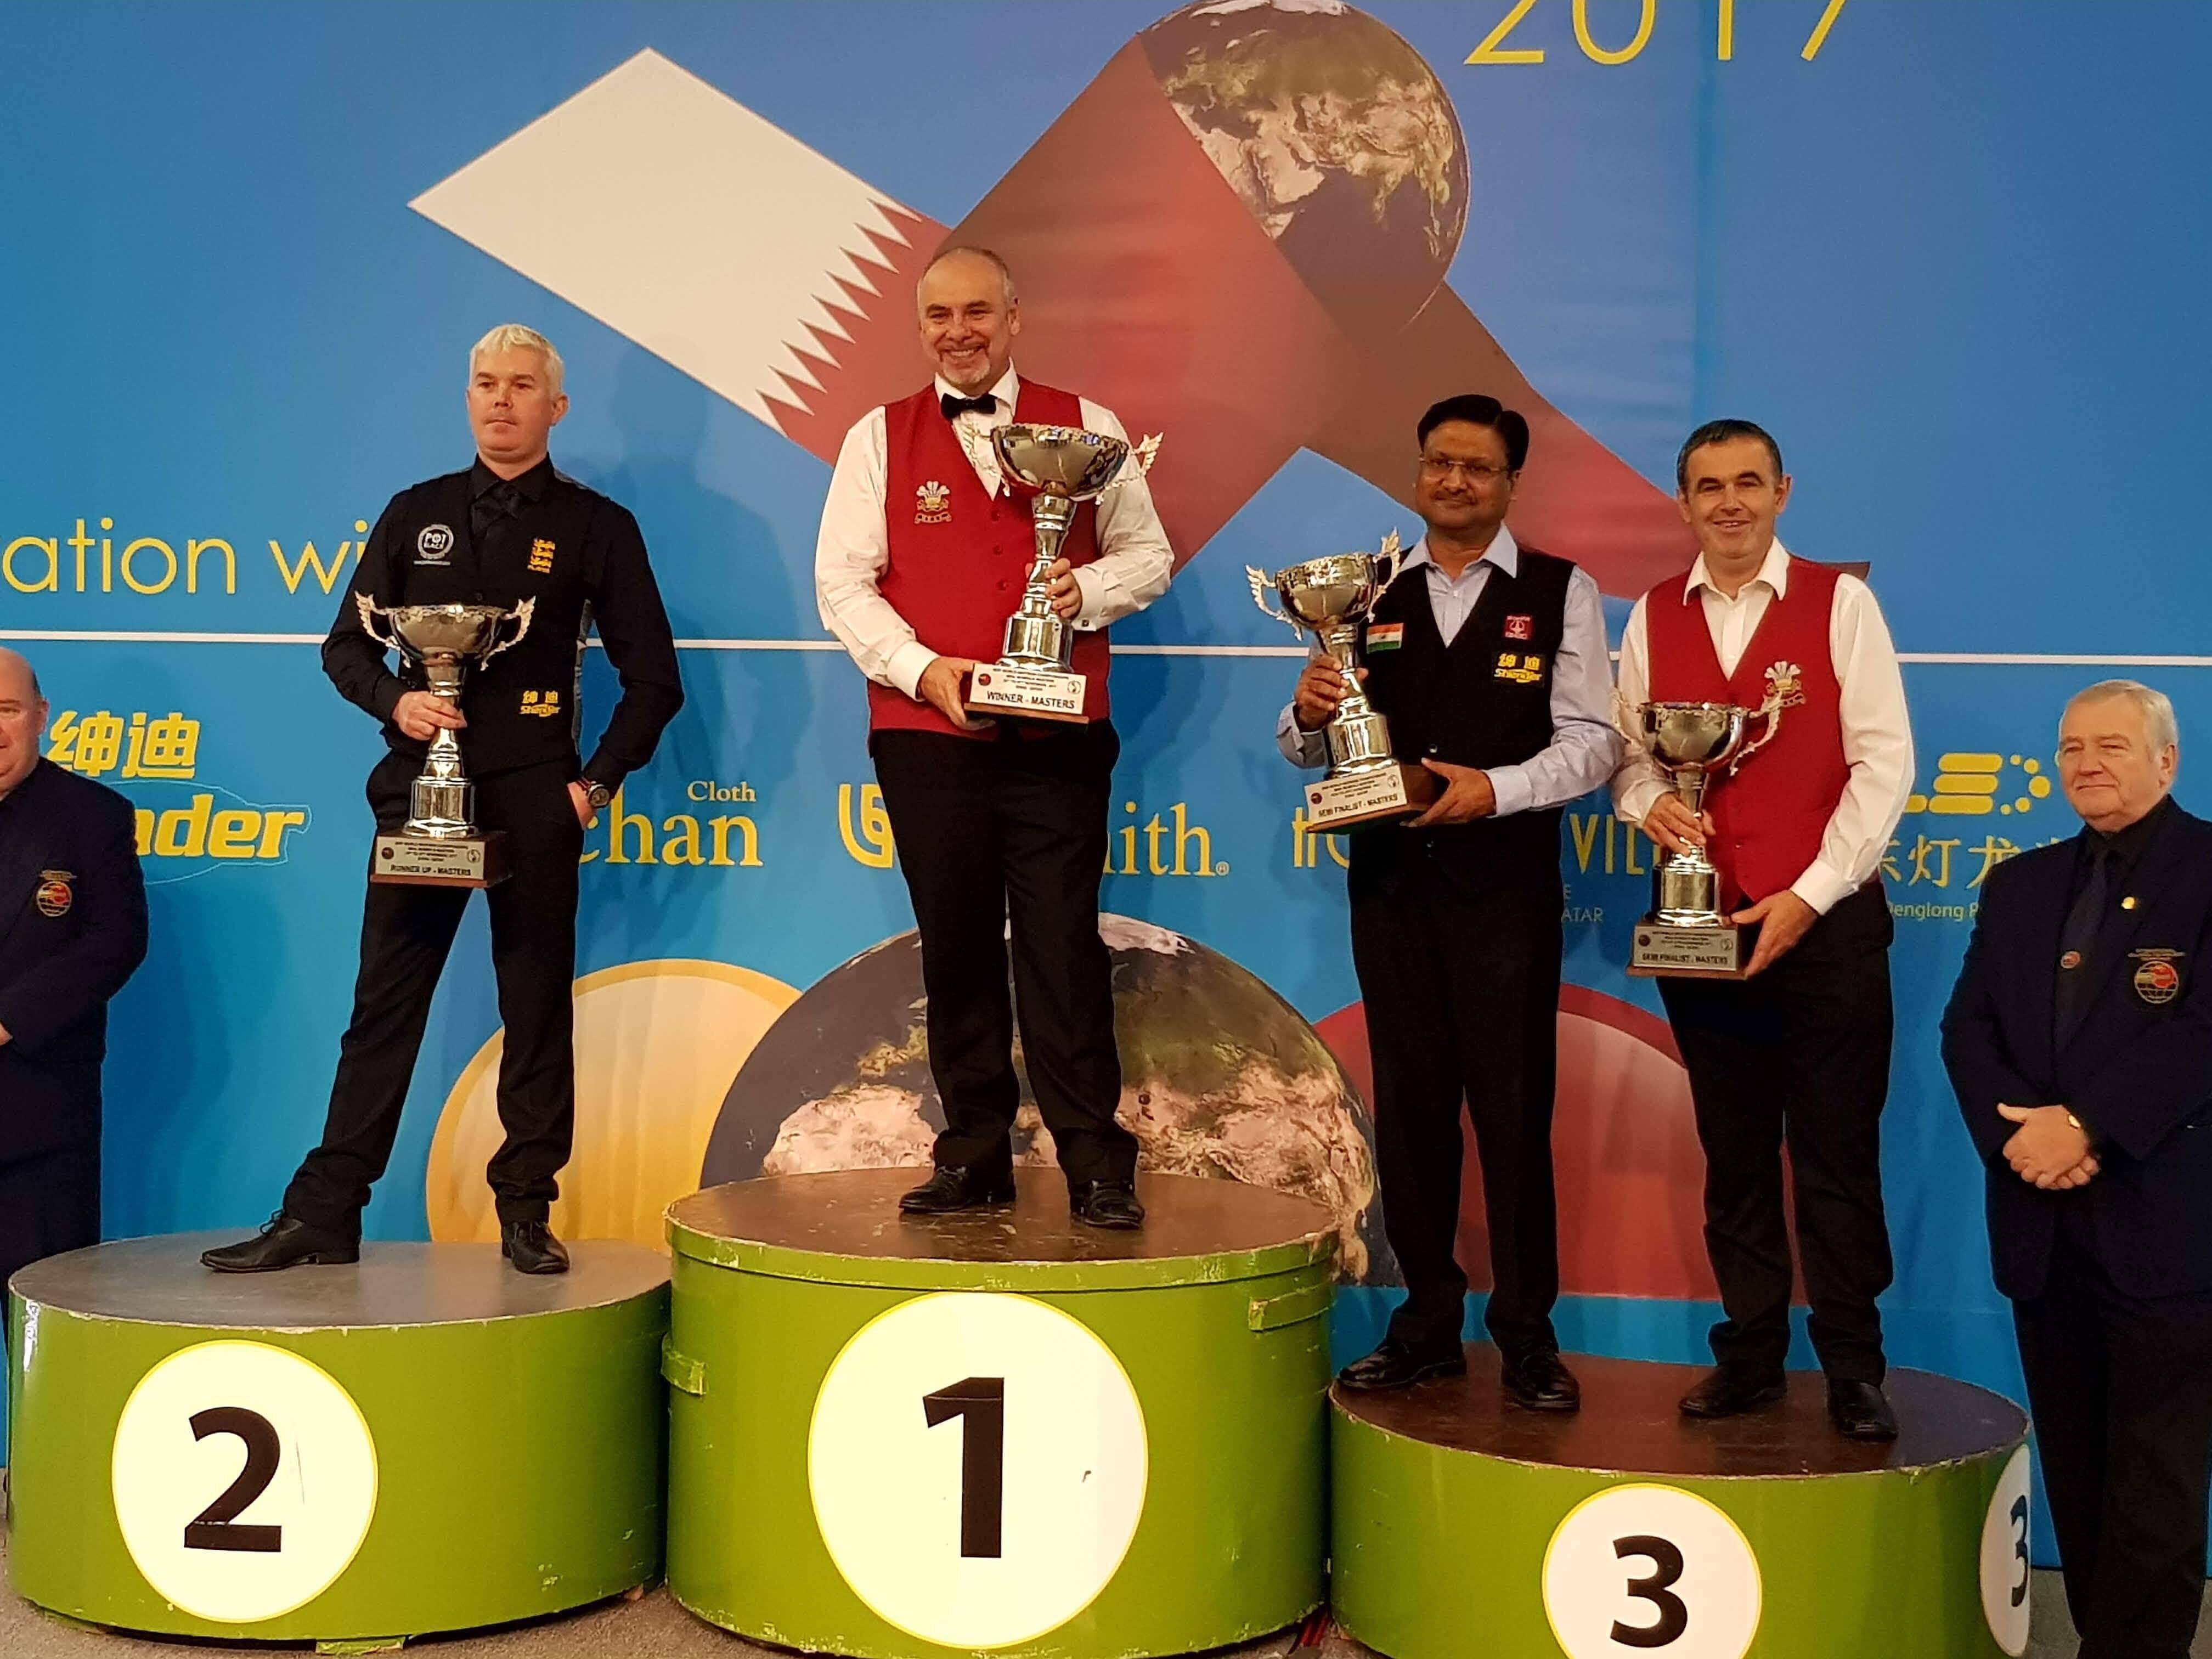 Ibsf 2017 Morgan Regains World Masters Title Welsh Snooker 